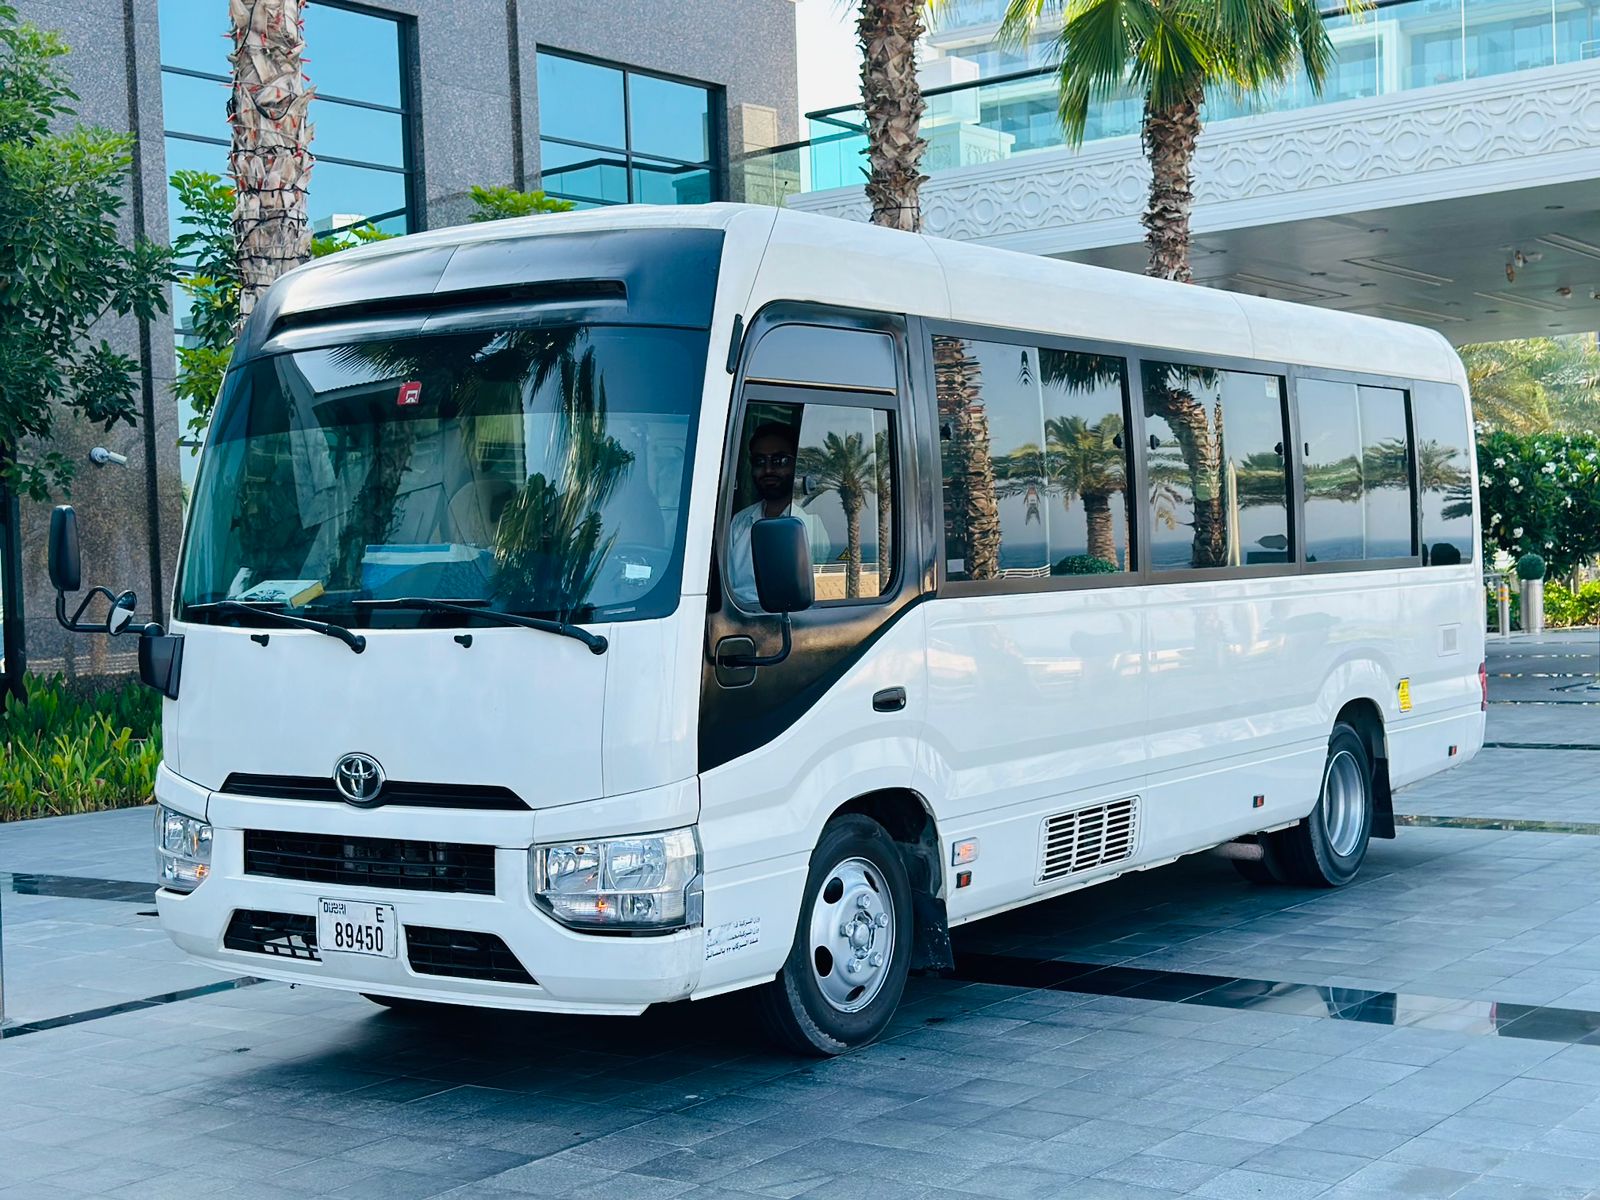 Toyota Coaster mini bus rental in white color in dubai parked